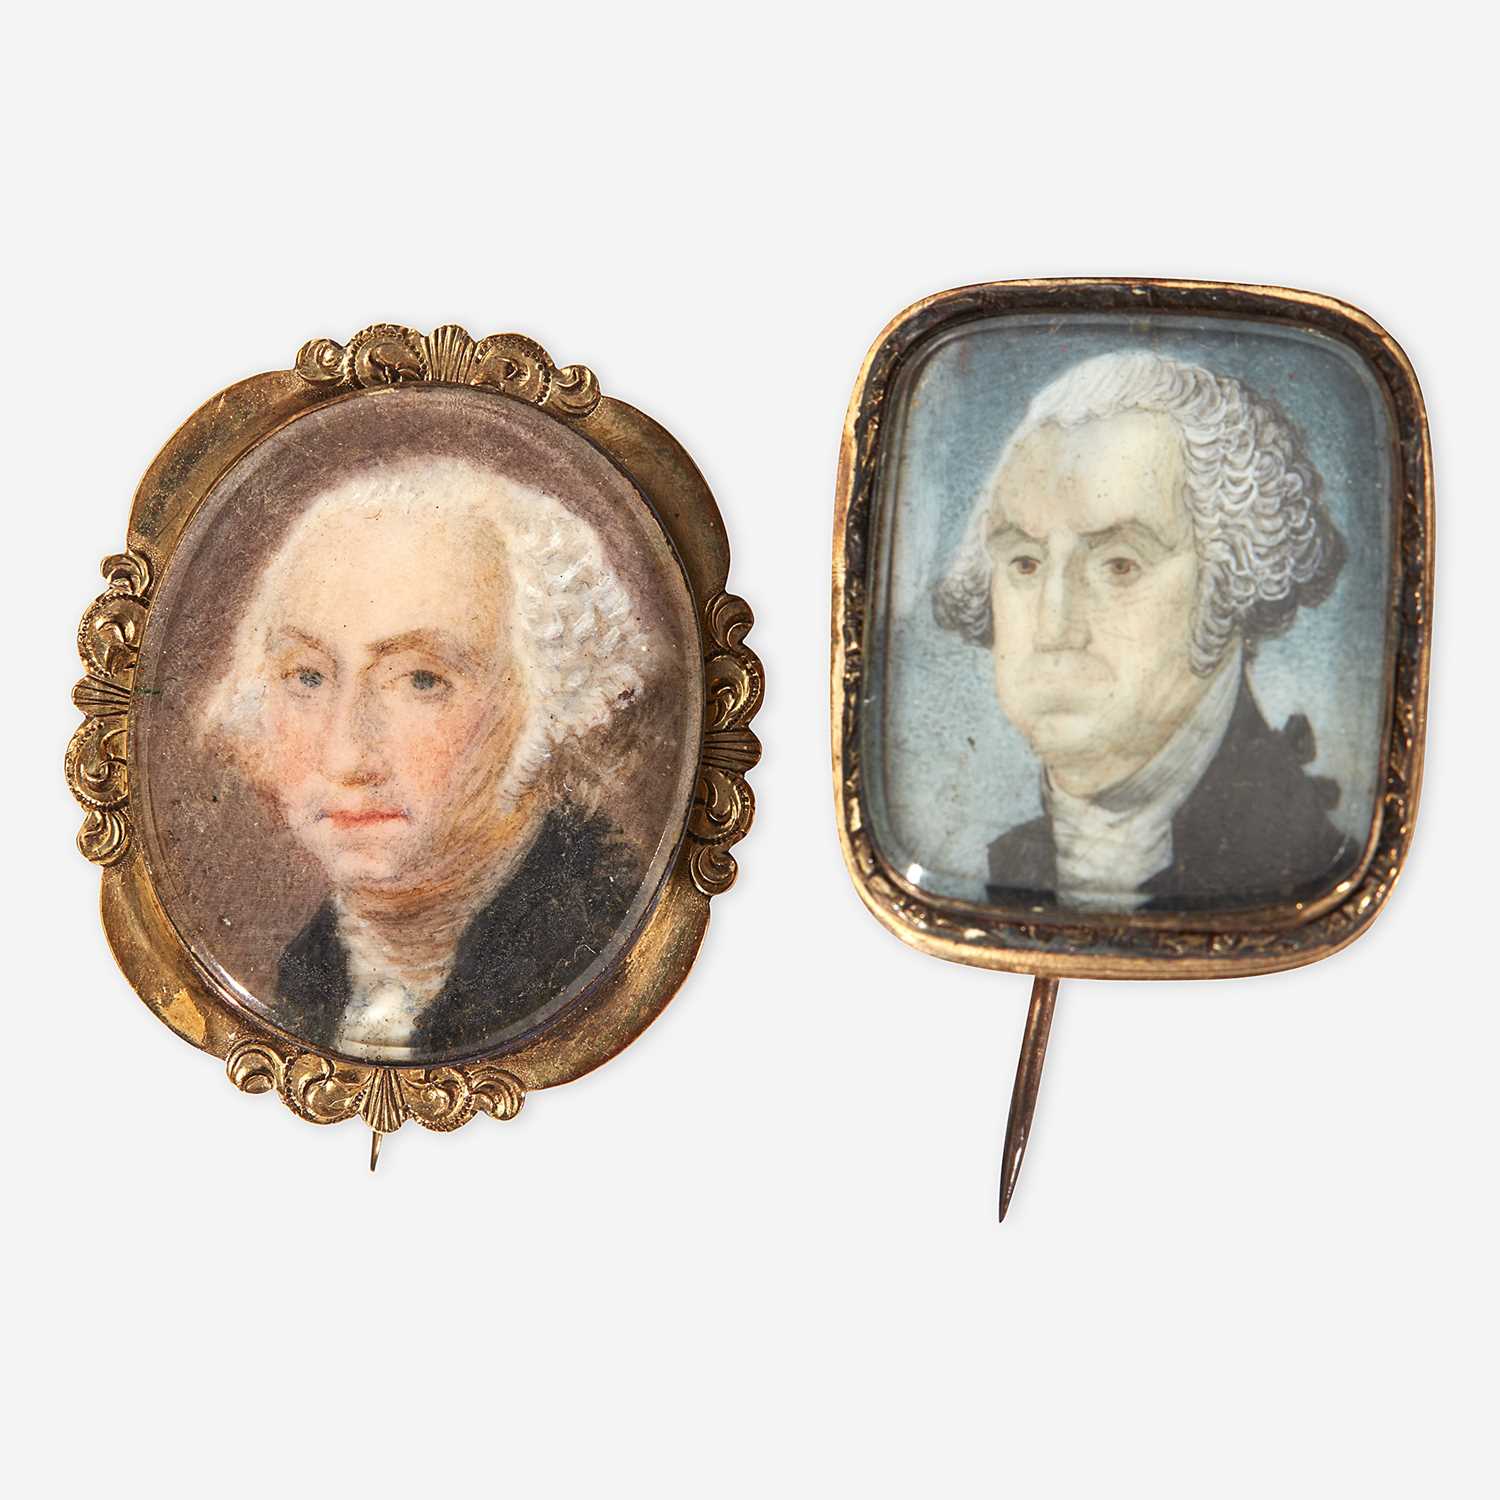 Lot 4 - Two commemorative portrait miniatures of George Washington